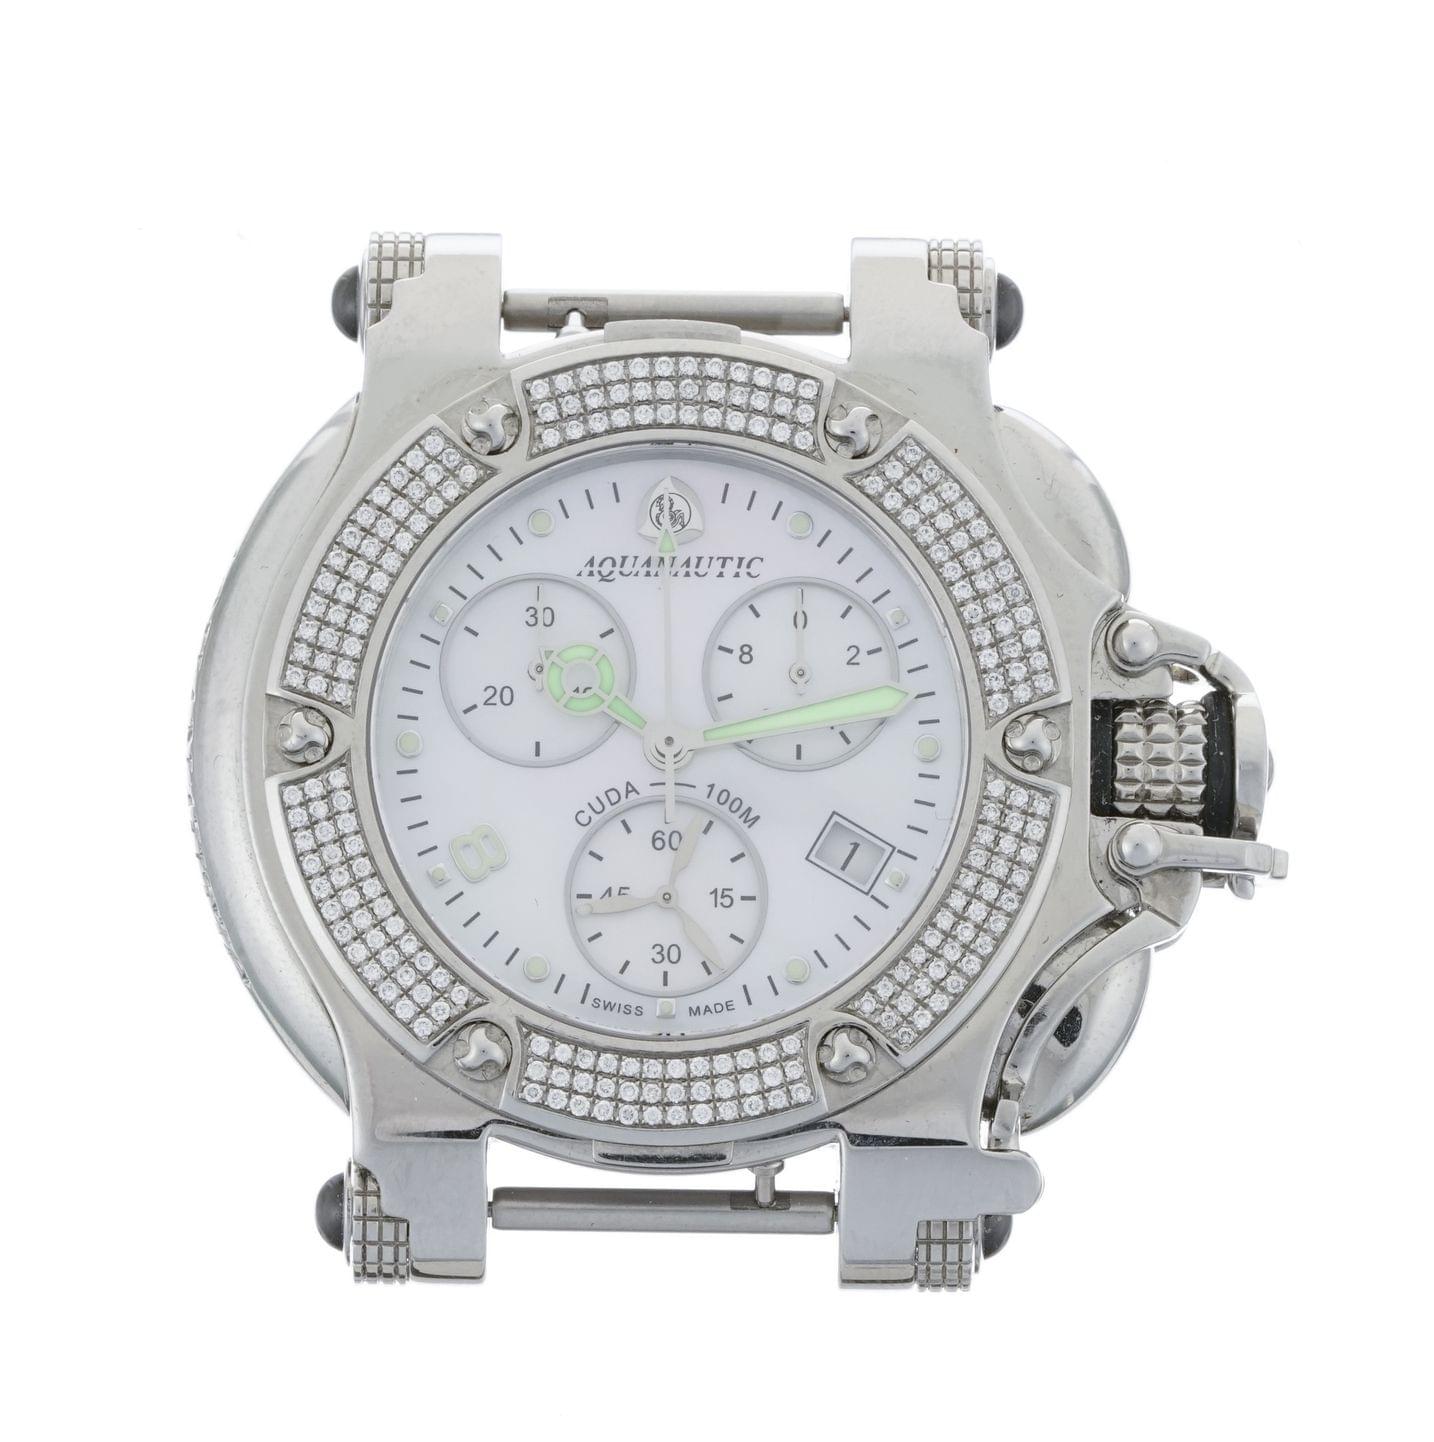 Aquanautic Cuda, montre ronde chronographe à quartz sans bracelet sertie de diamants